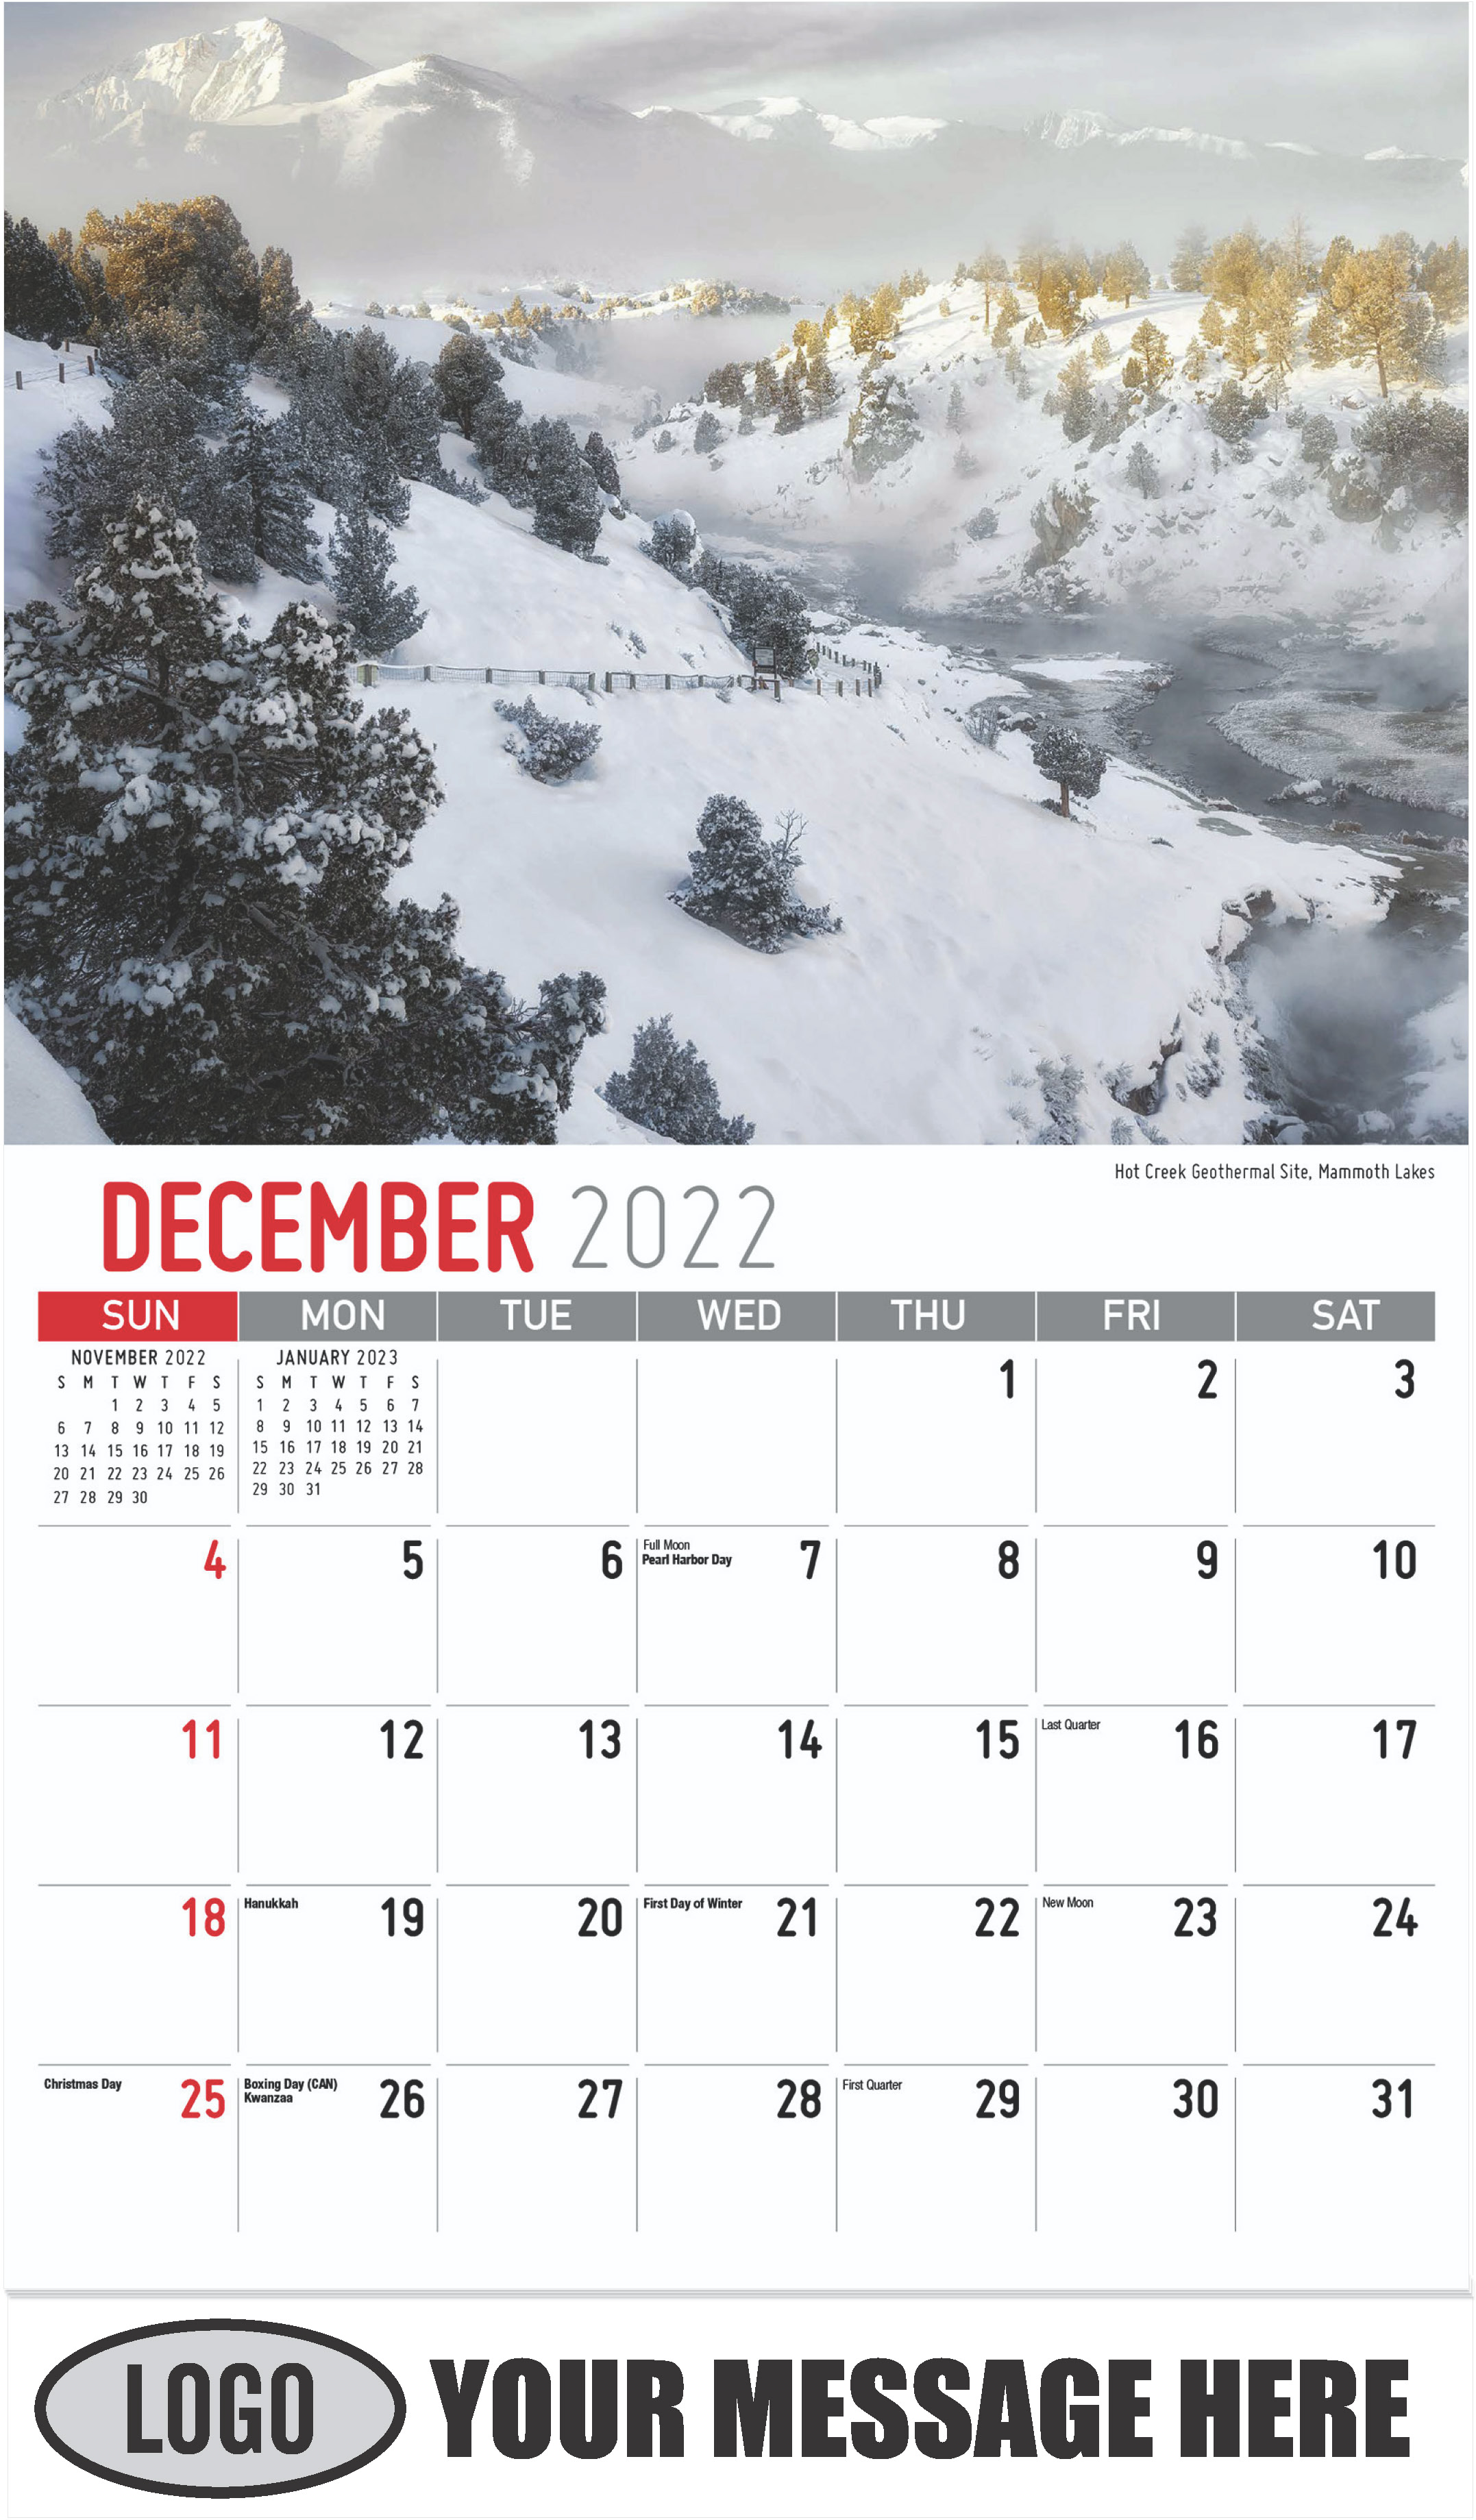 Hot Creek Geothermal Site, Mammoth Lakes - December 2022 - Scenes of California 2023 Promotional Calendar